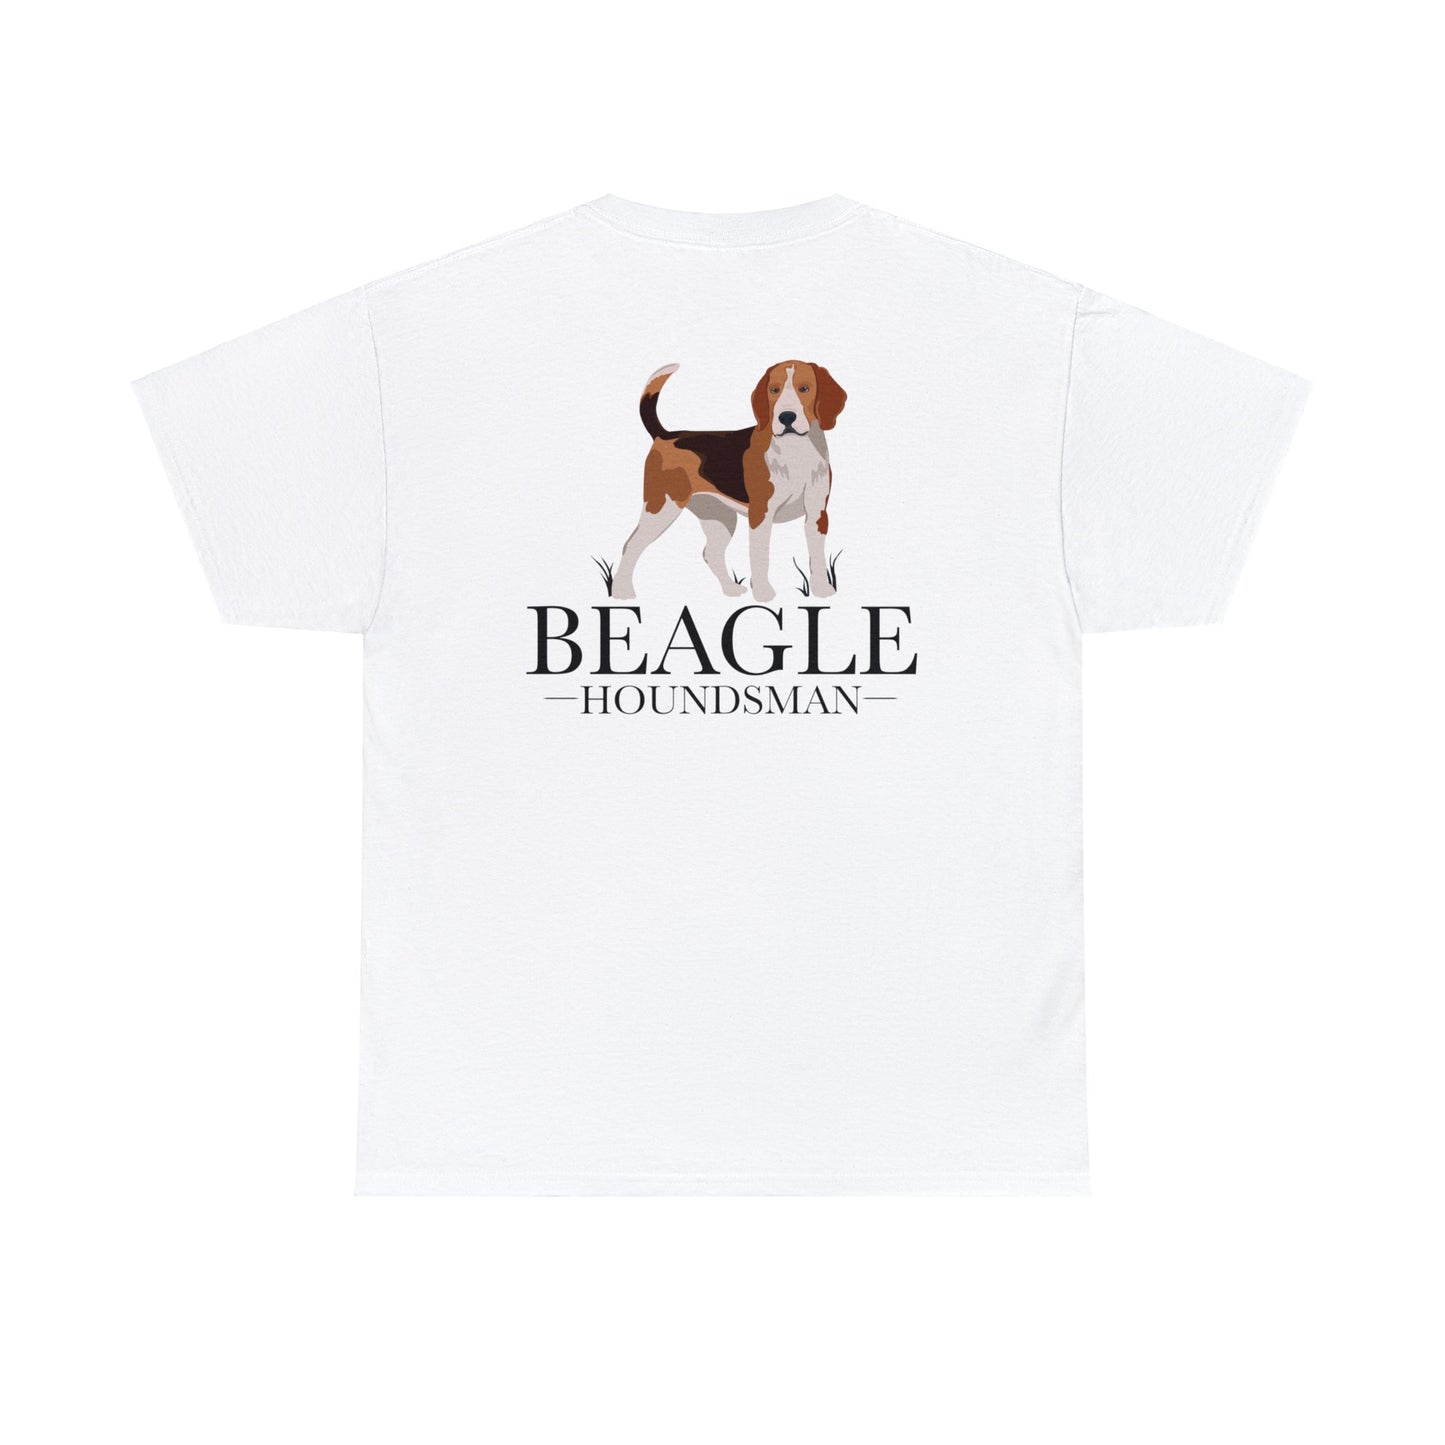 Beagle tee